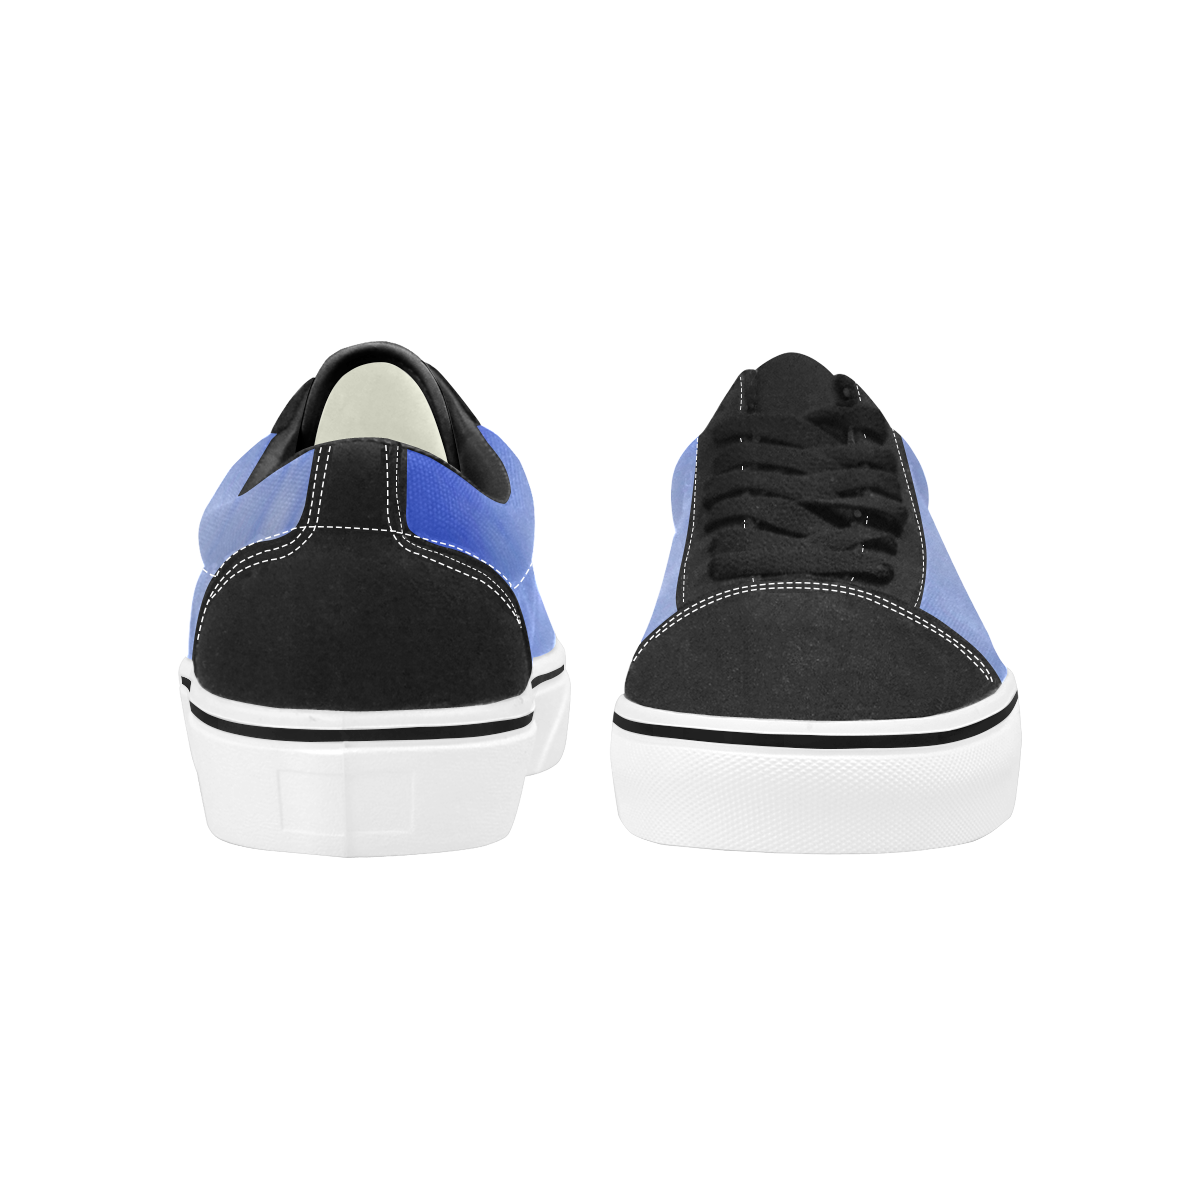 Blue Clouds Men's Low Top Skateboarding Shoes (Model E001-2)